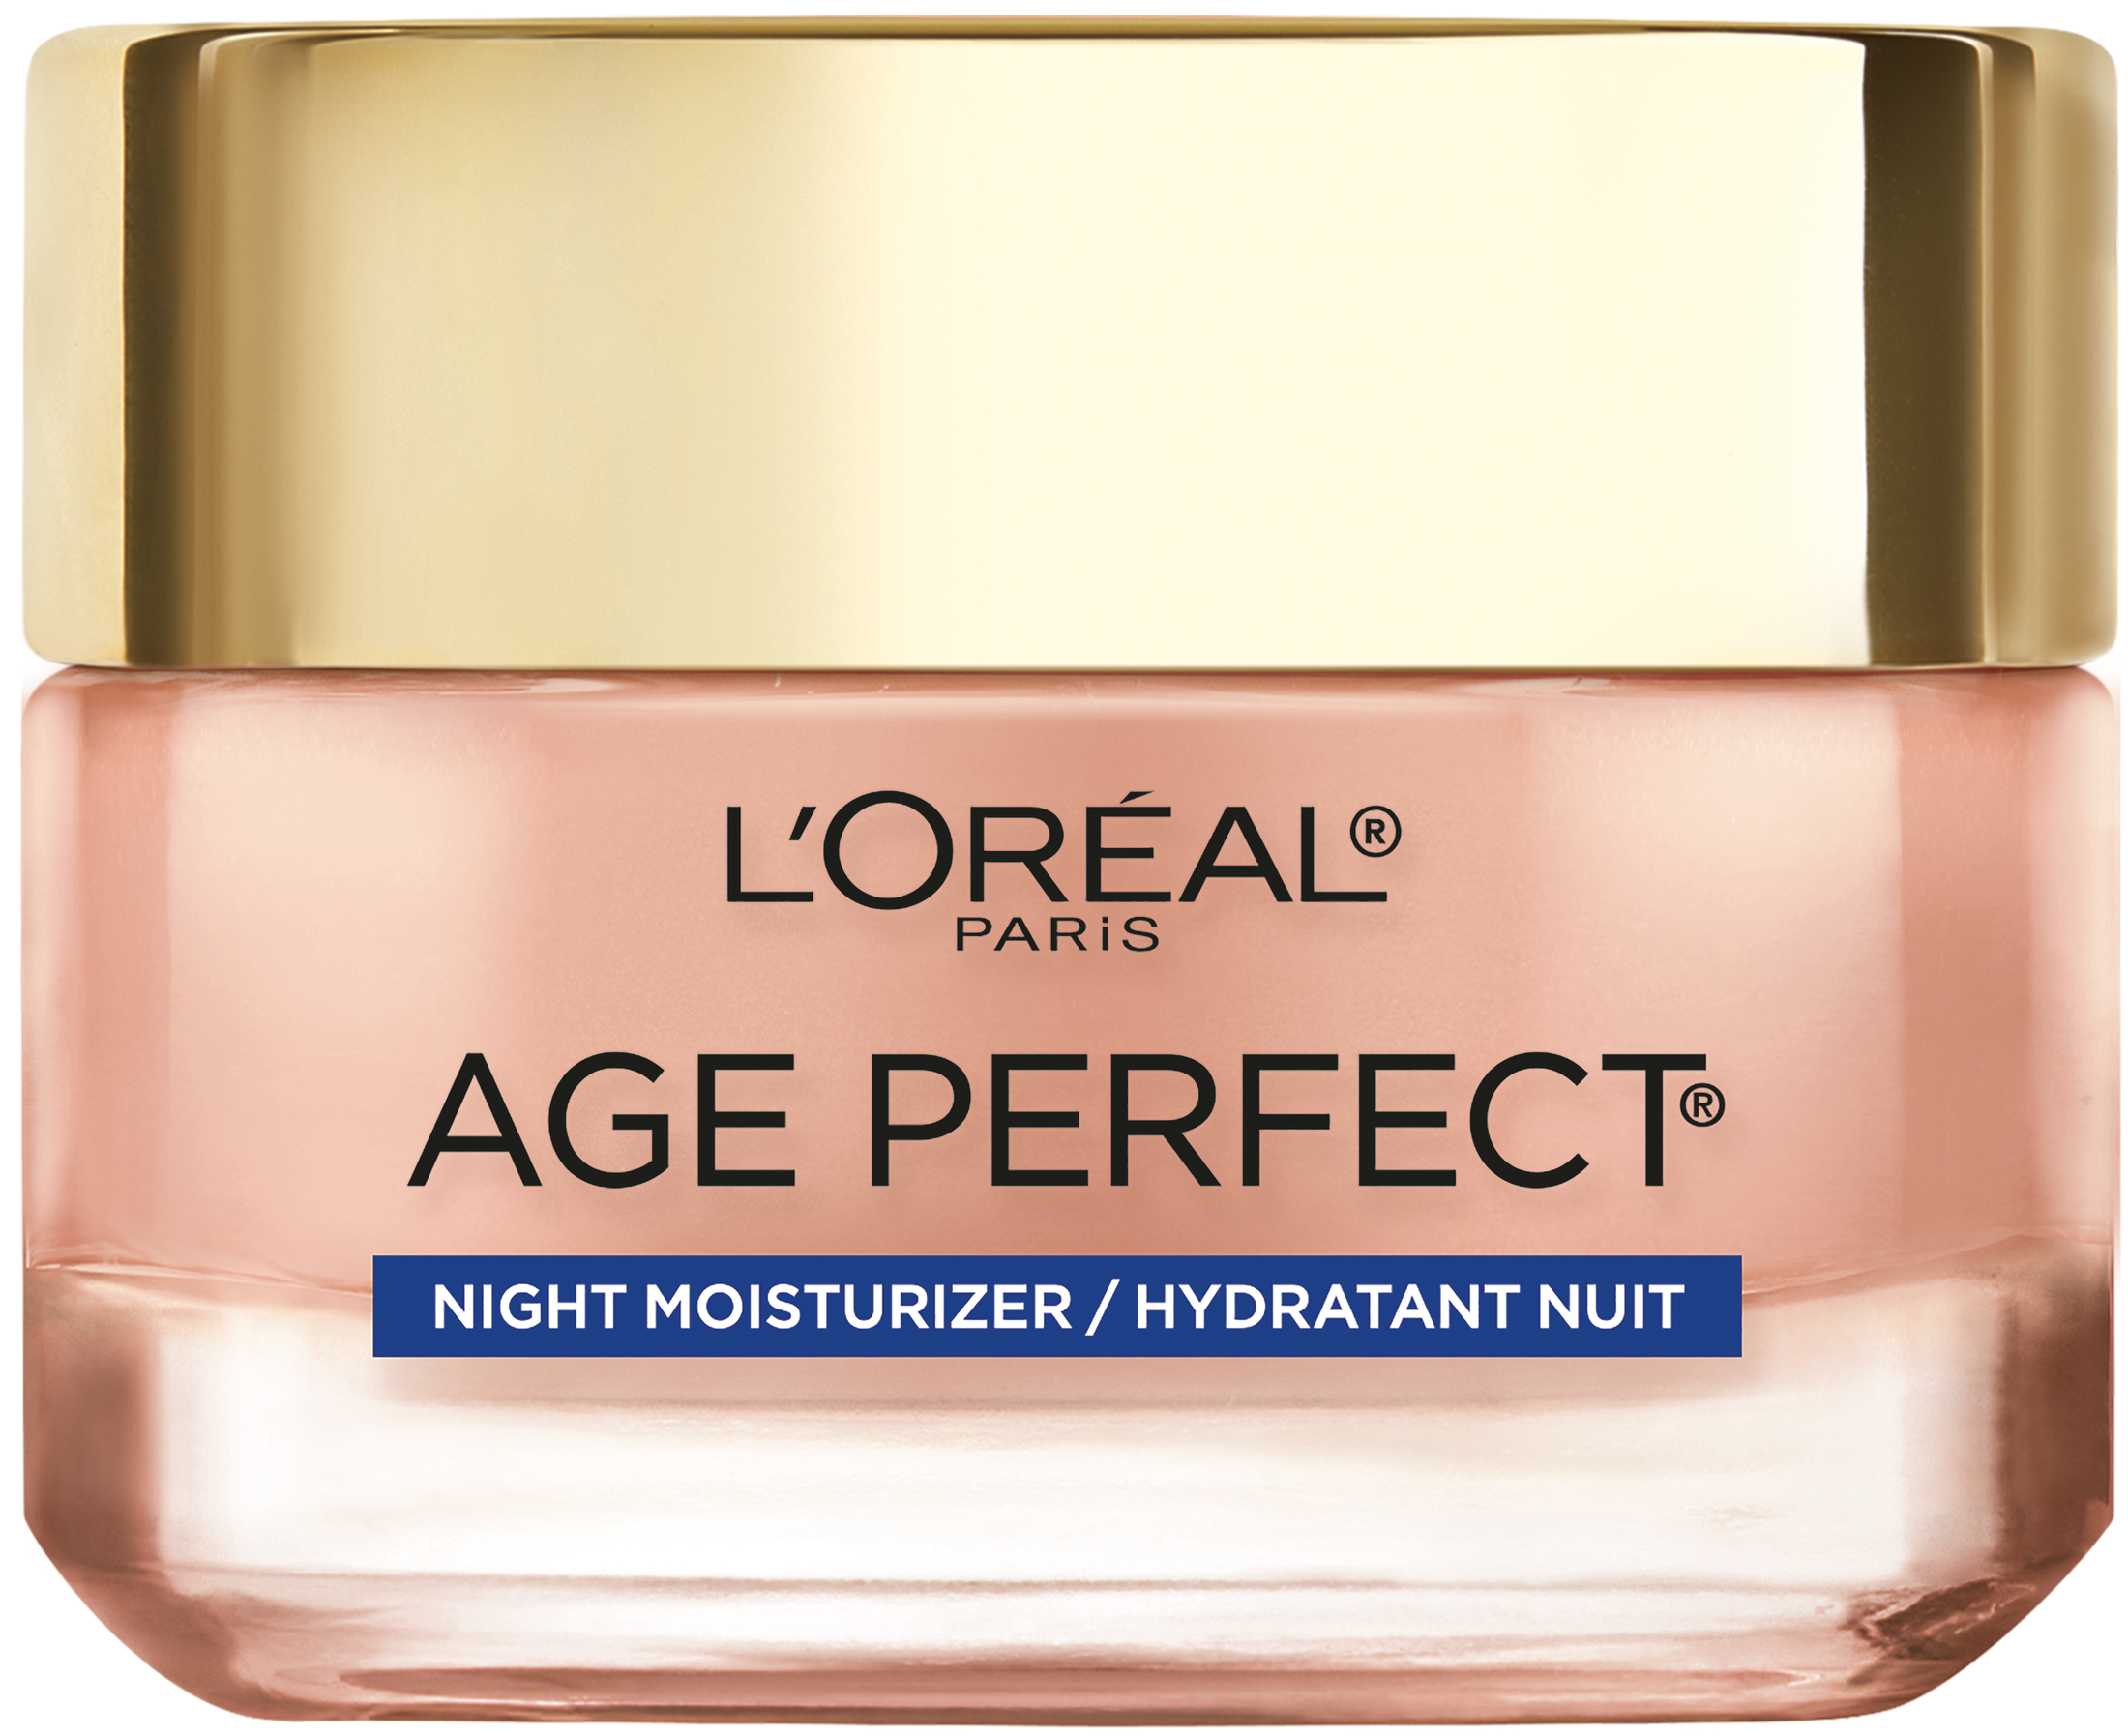 L'Oreal Paris Age Perfect Rosy Tone Night Moisturizer, 1.7 fl oz - image 1 of 15